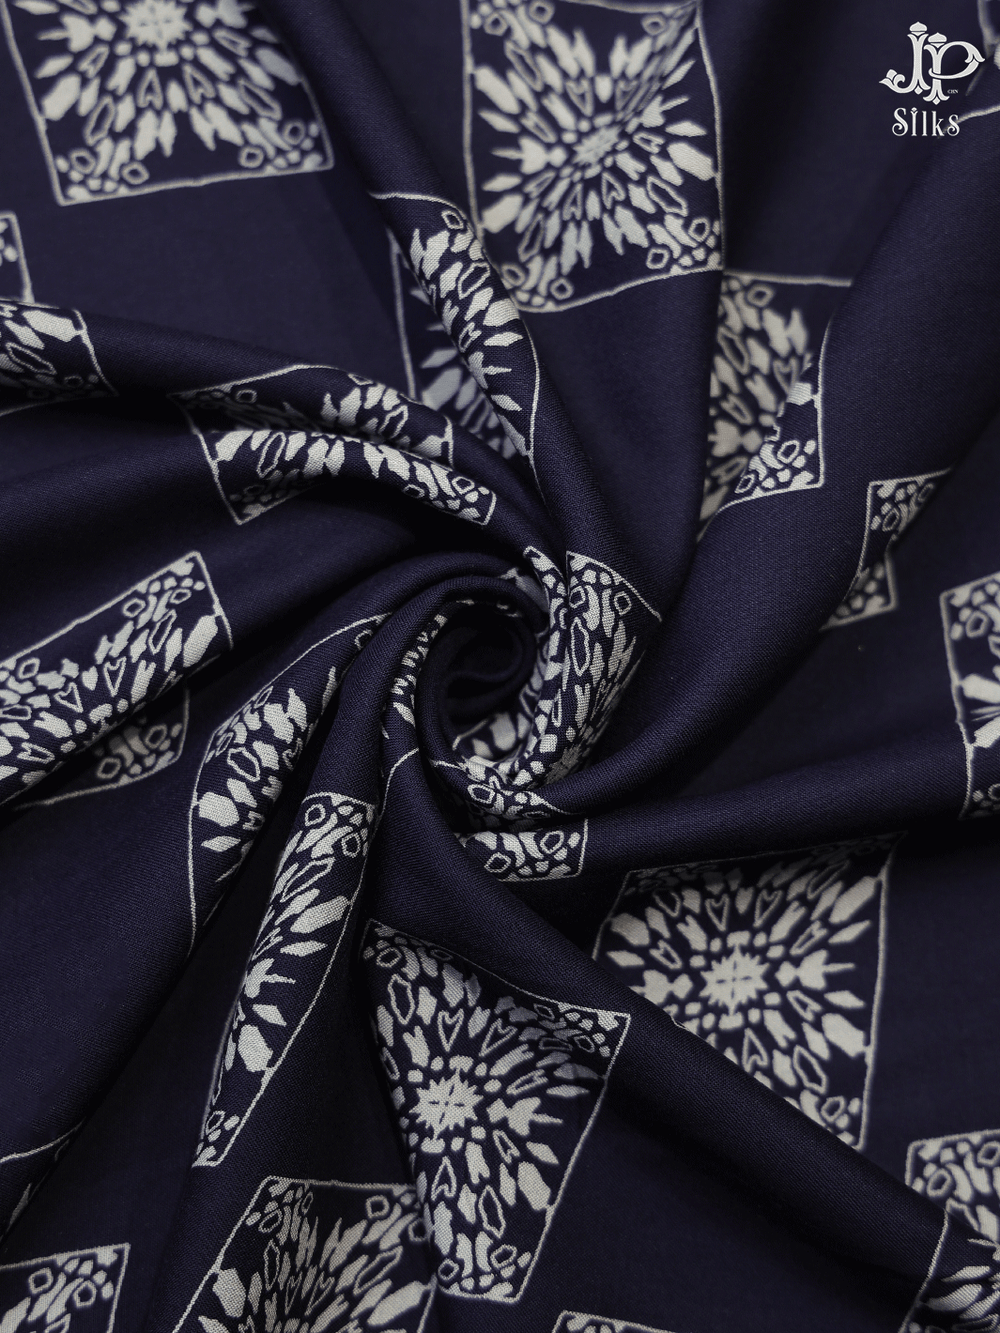 Black Rayon Fabric - A9267 - View 1